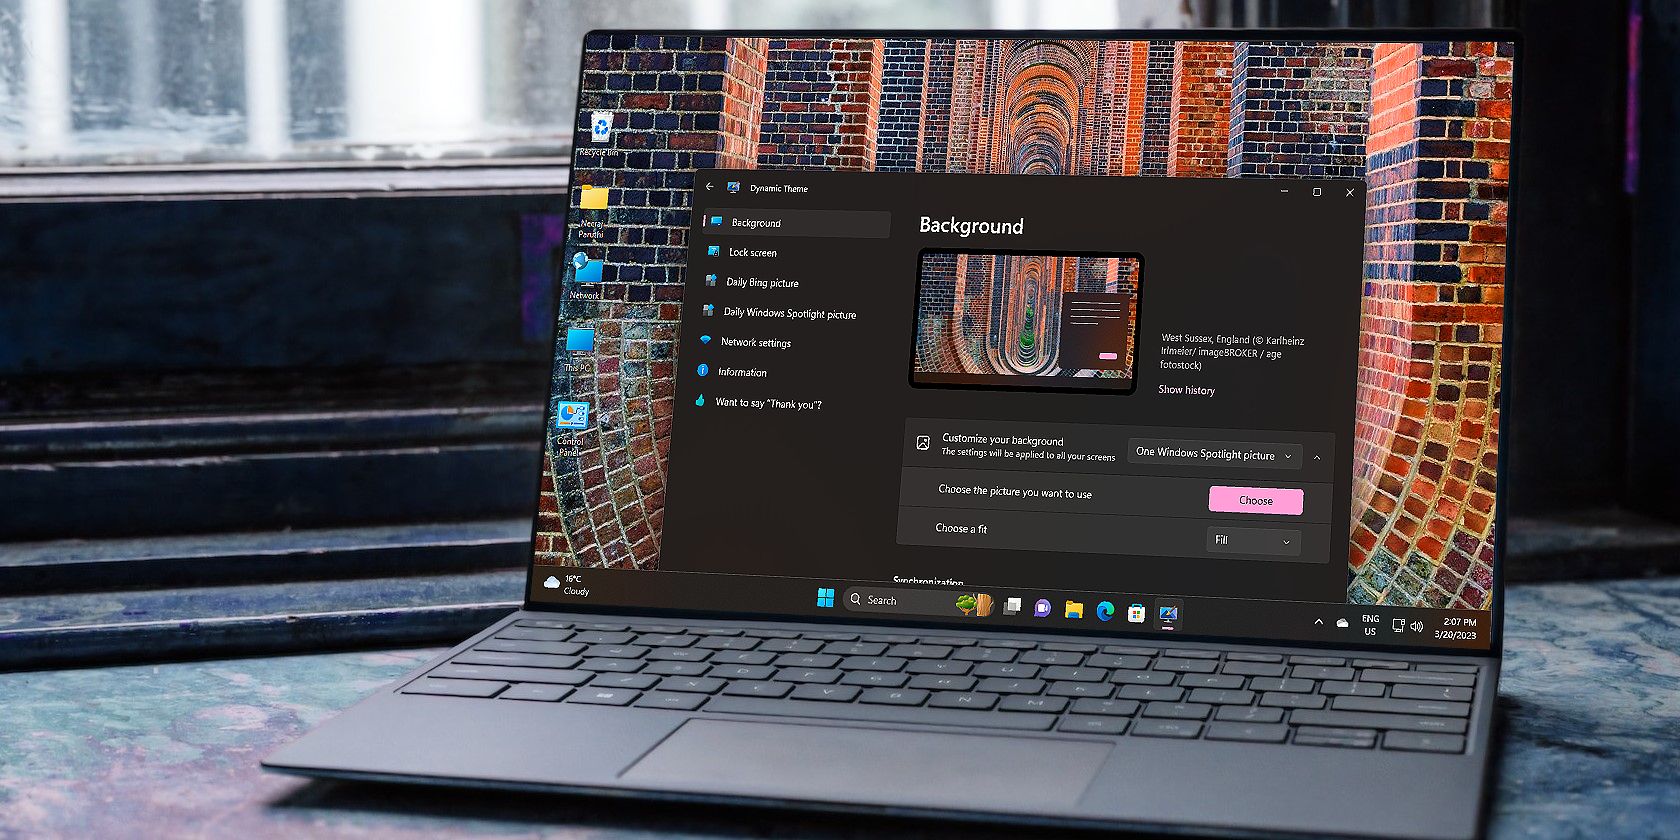 Windows Laptop With Dynamic Theme App on Screen